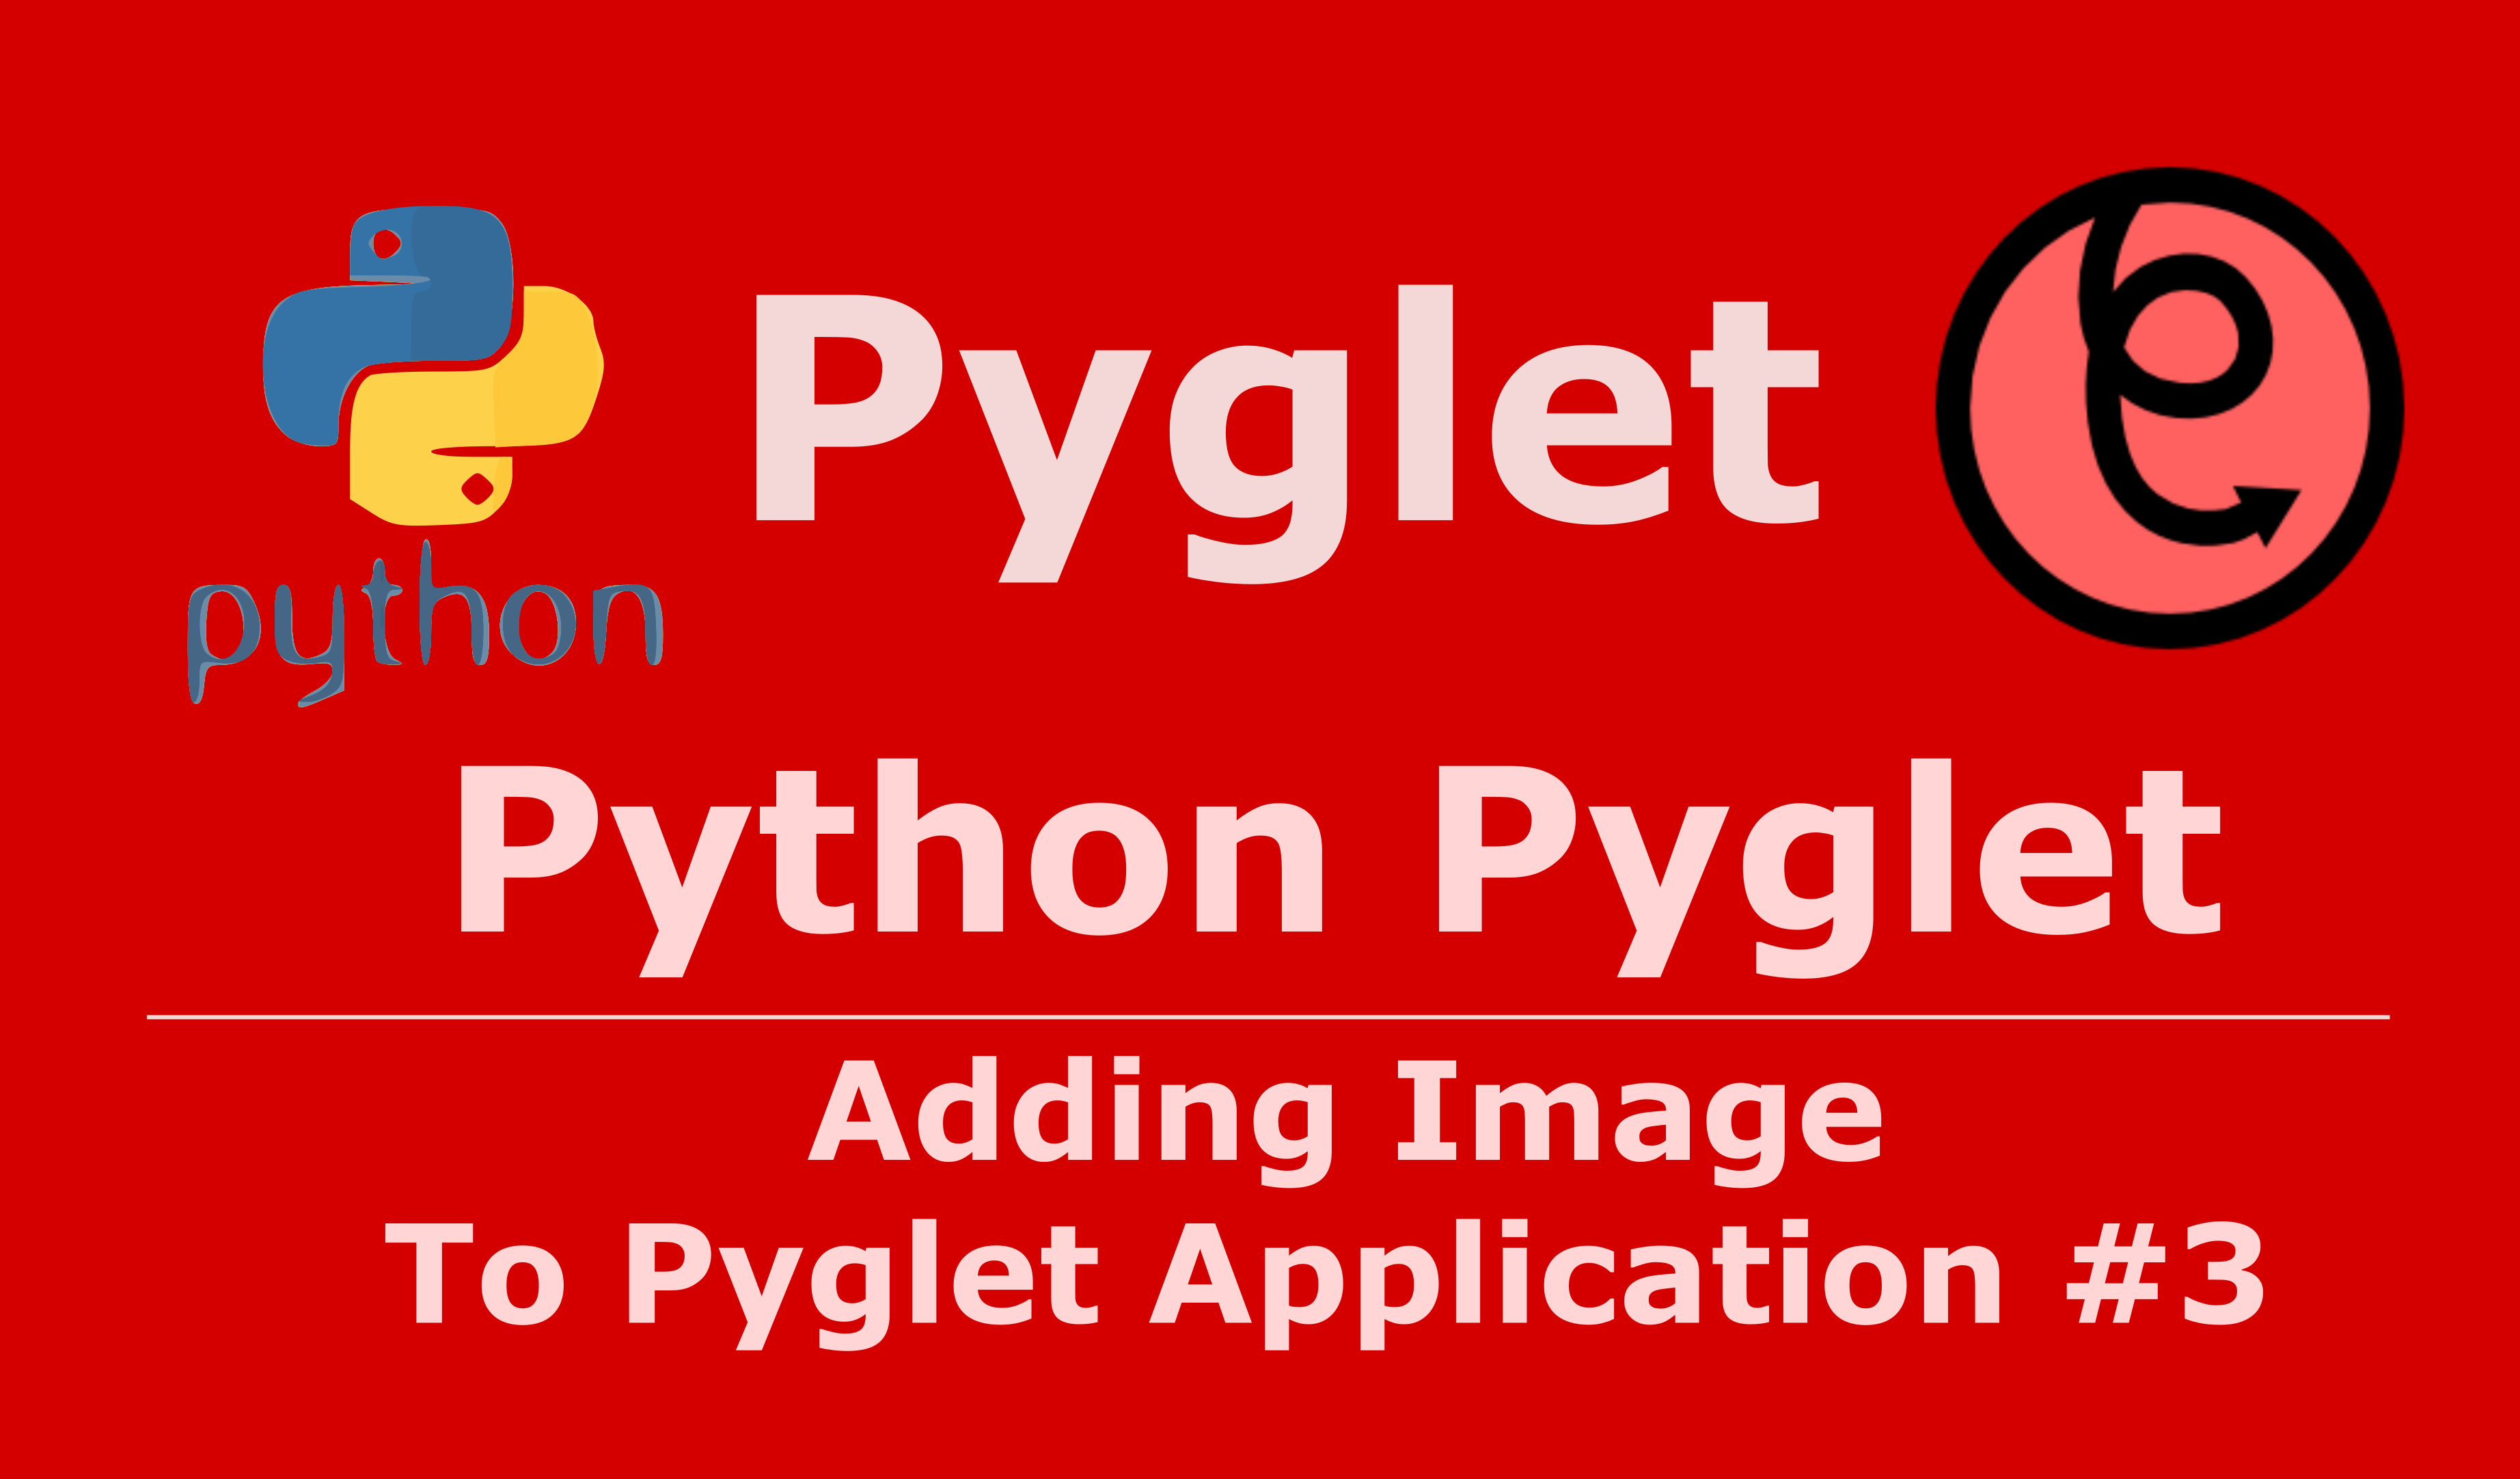 Pyglet Python Adding Image